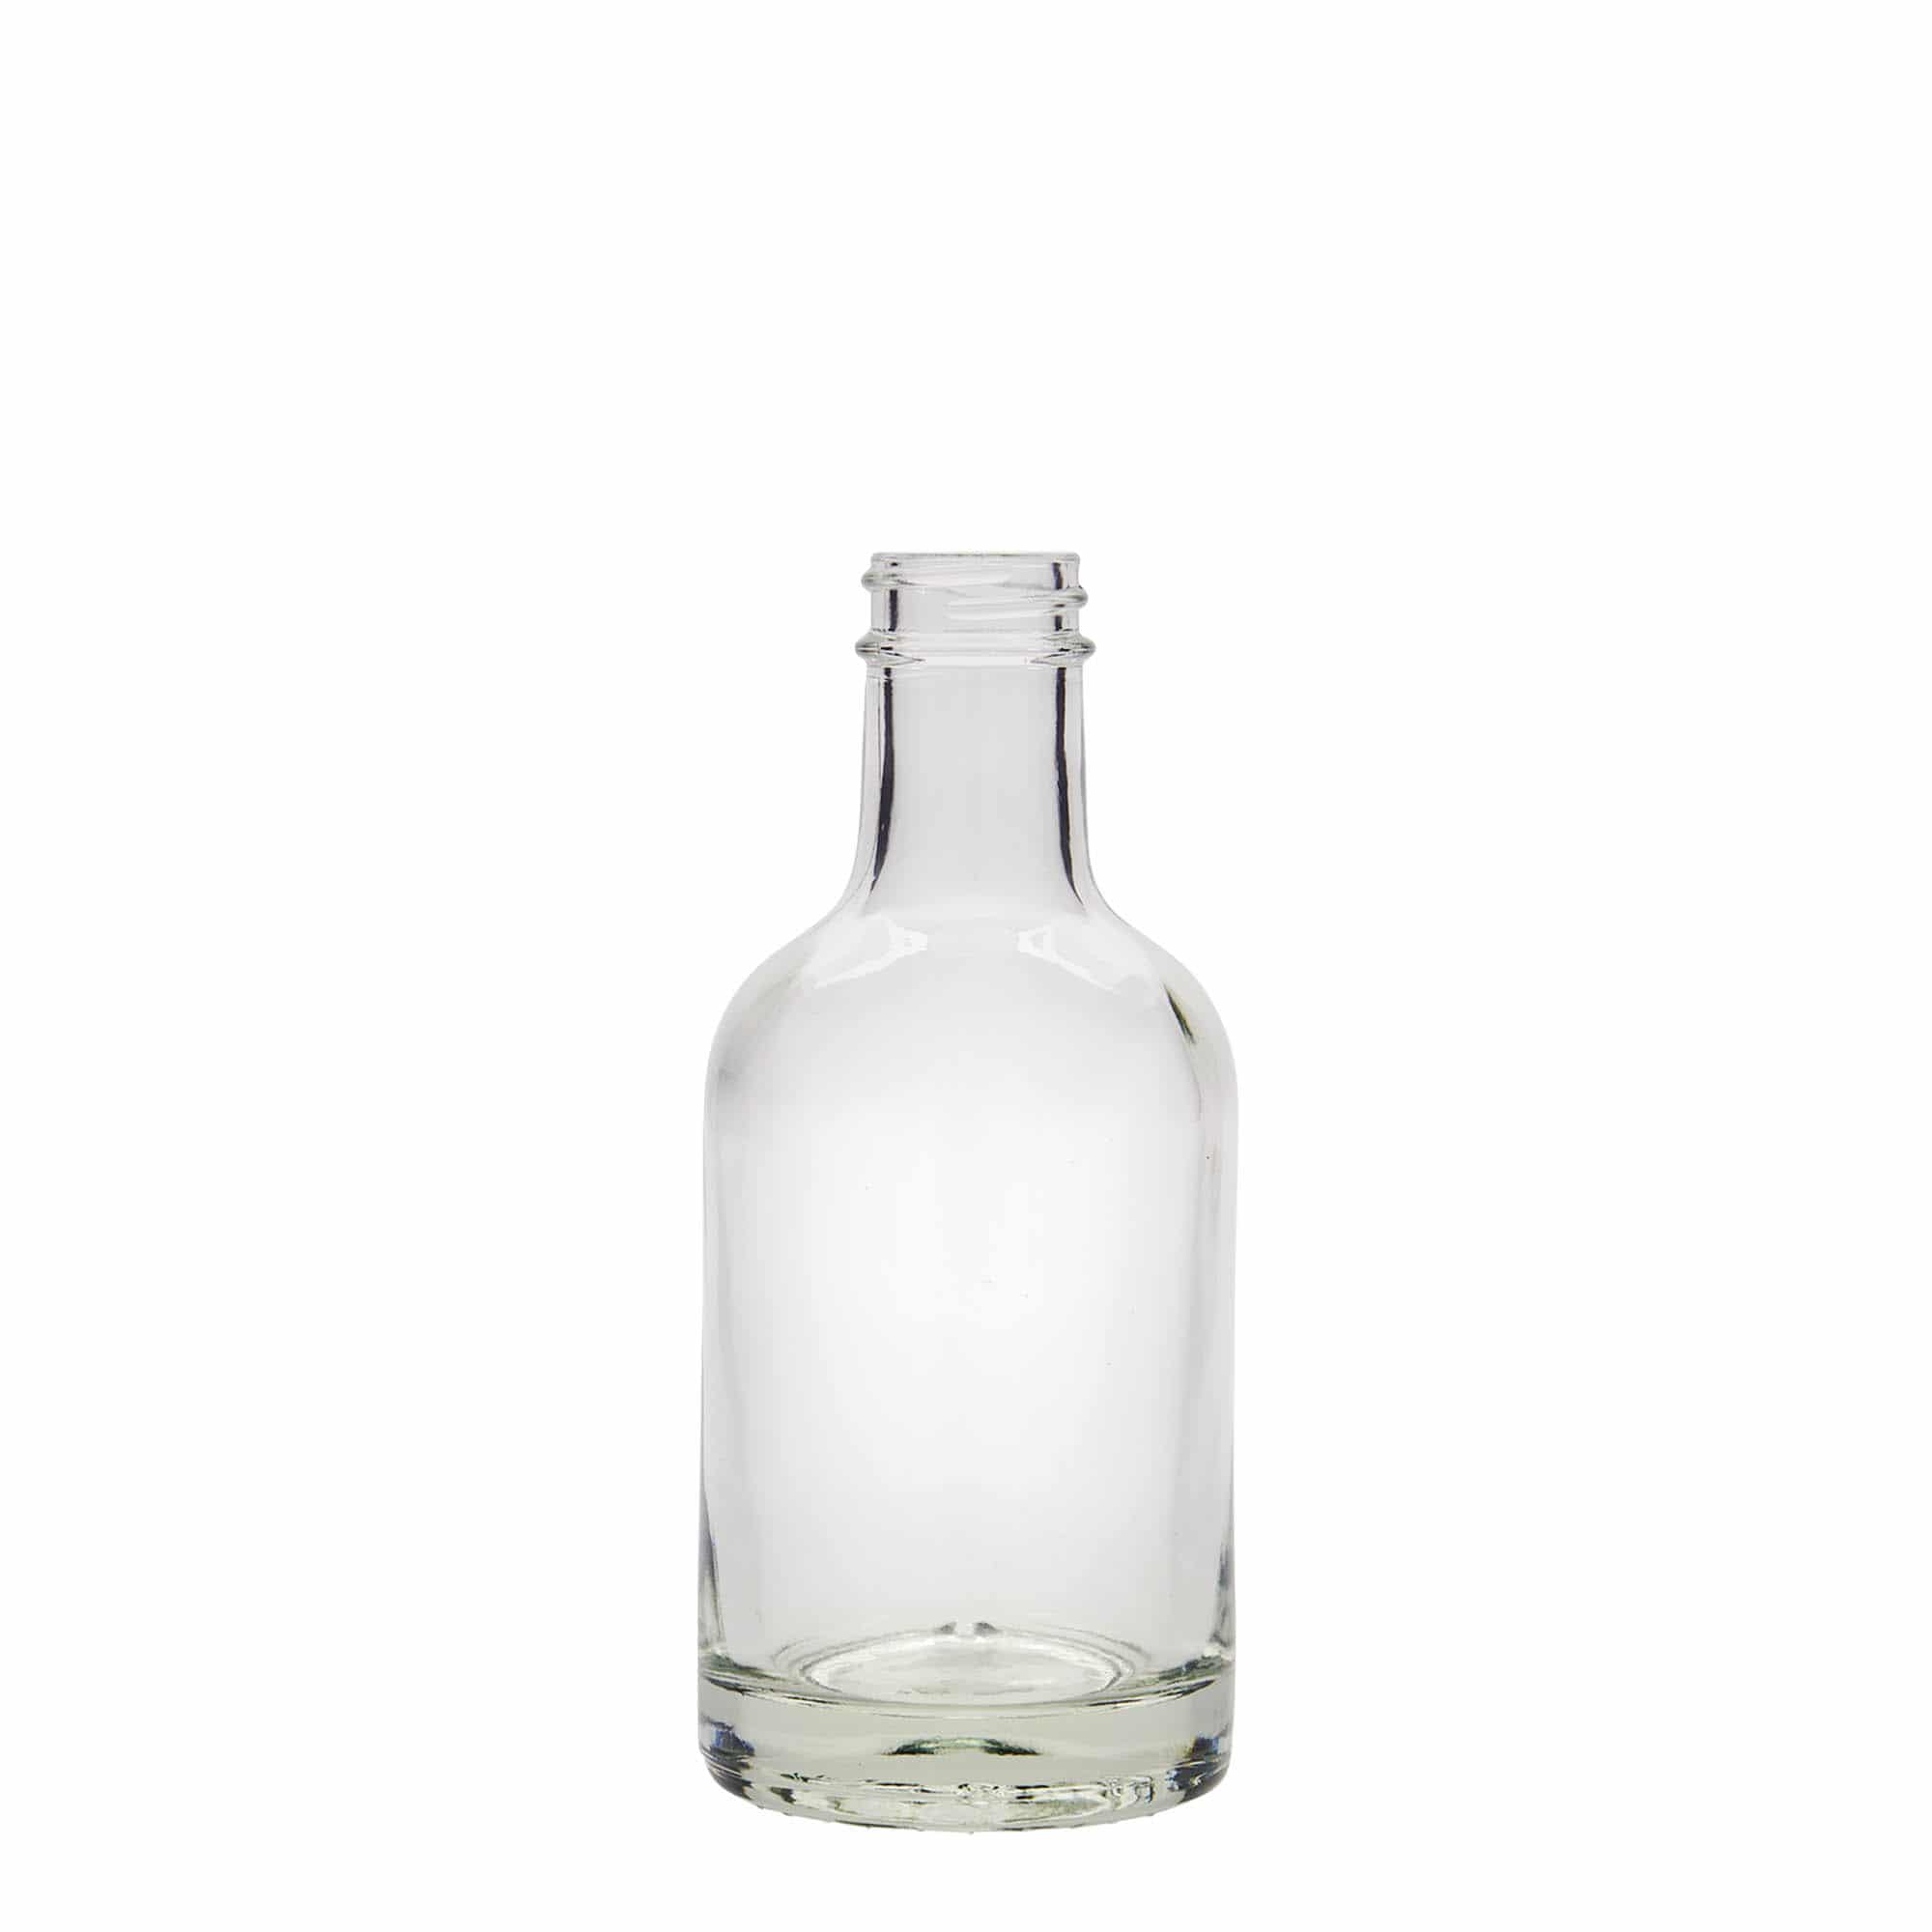 200 ml glass bottle 'First Class', closure: GPI 28